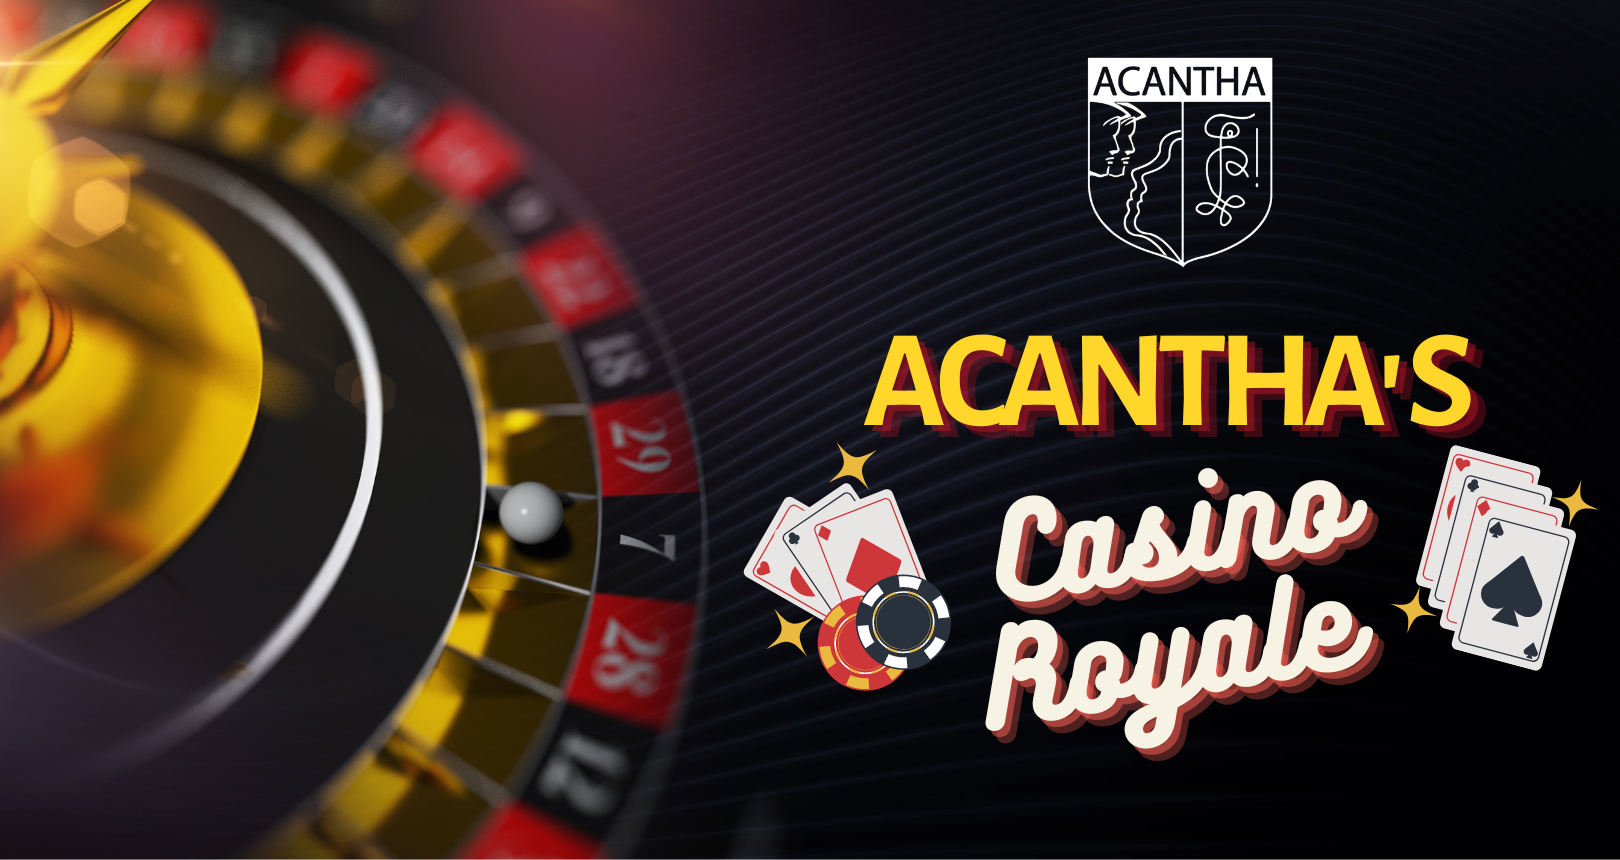 Acantha's Casino Royale